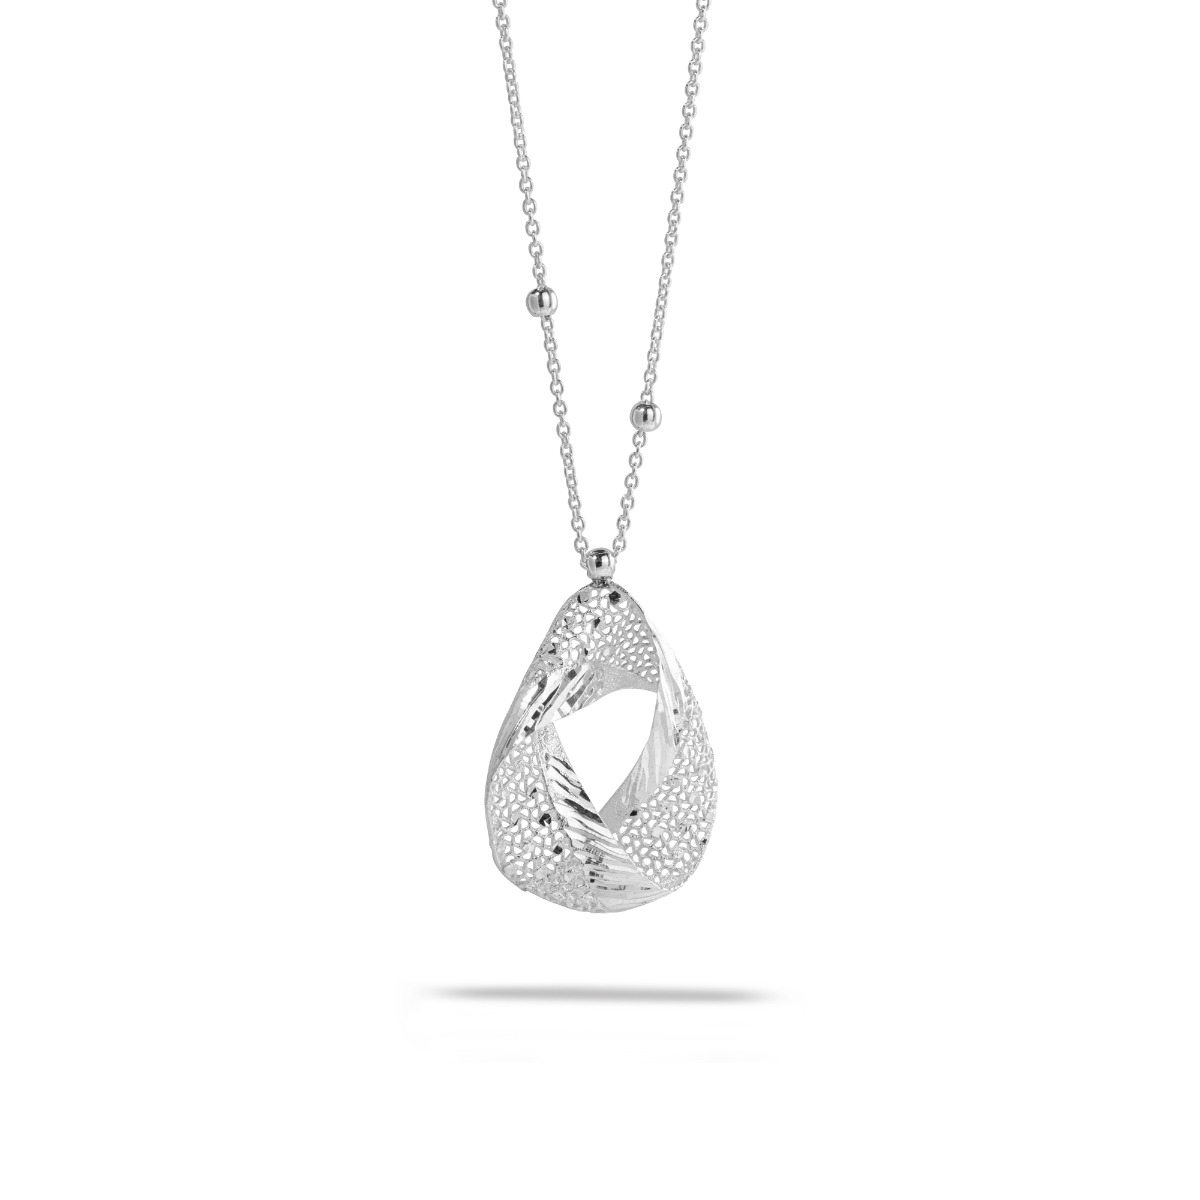 Modern 3D Oval Net Design Pendant Necklace in Silver